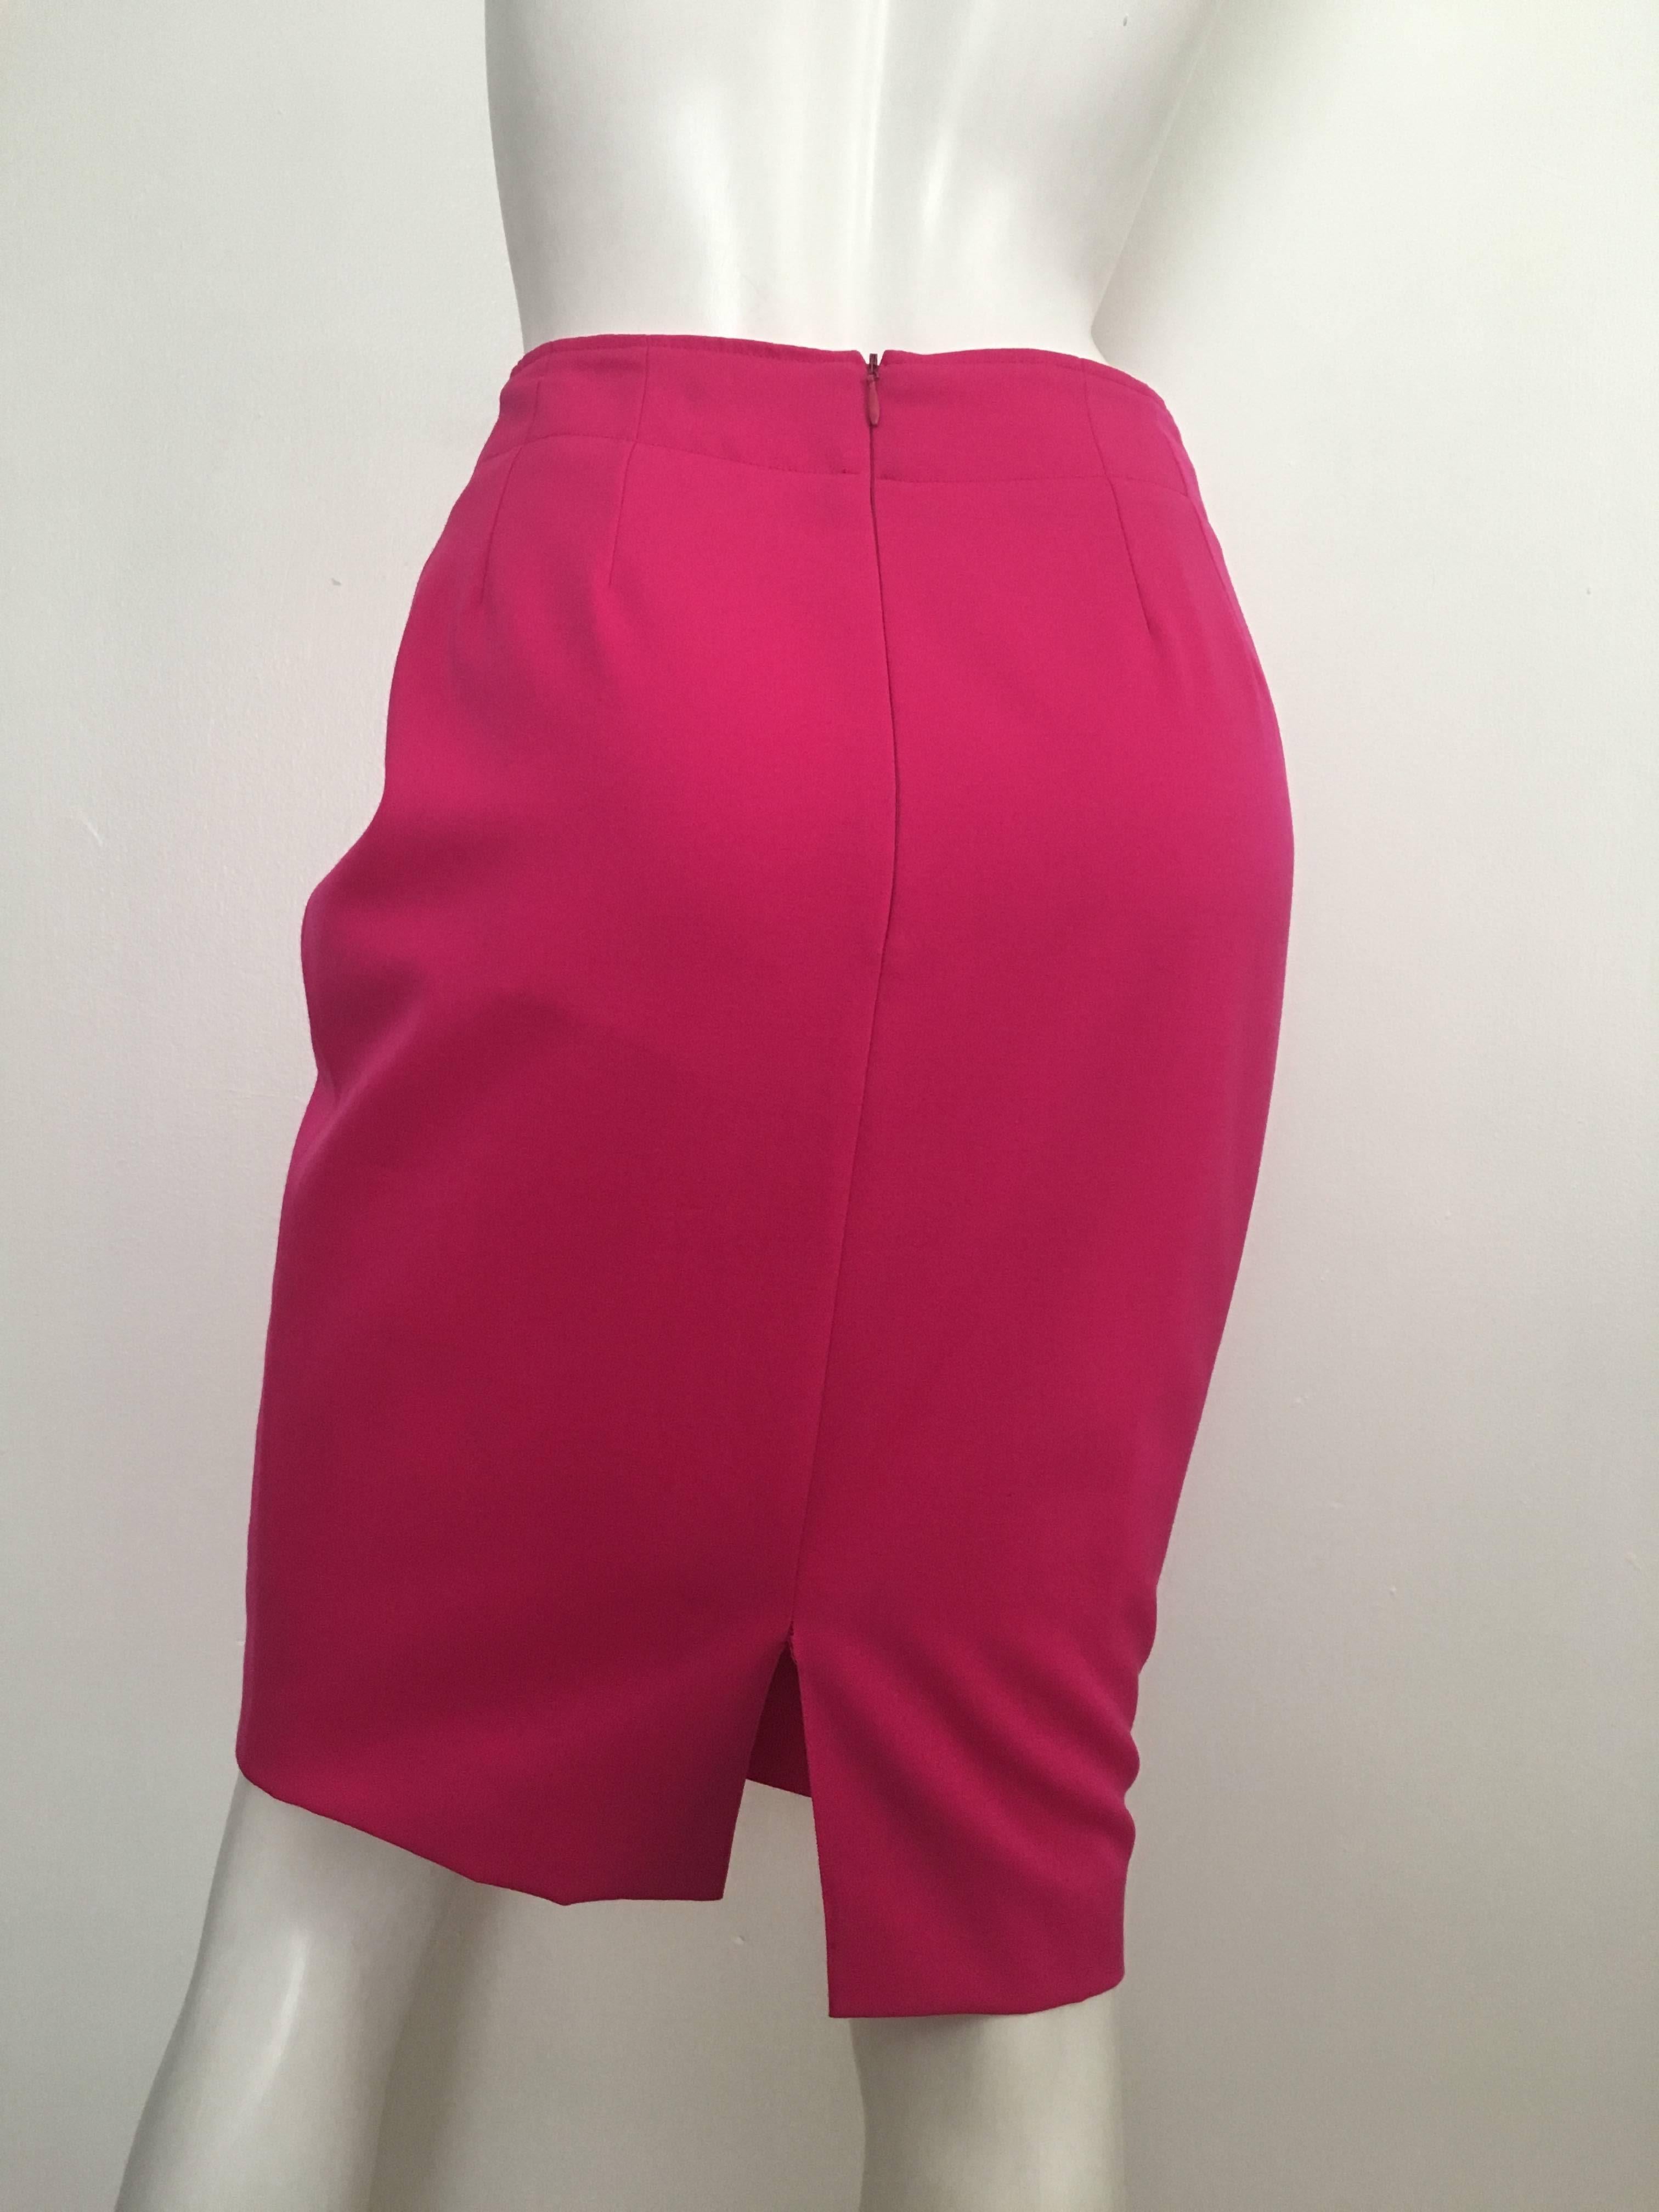 hot pink pencil skirt